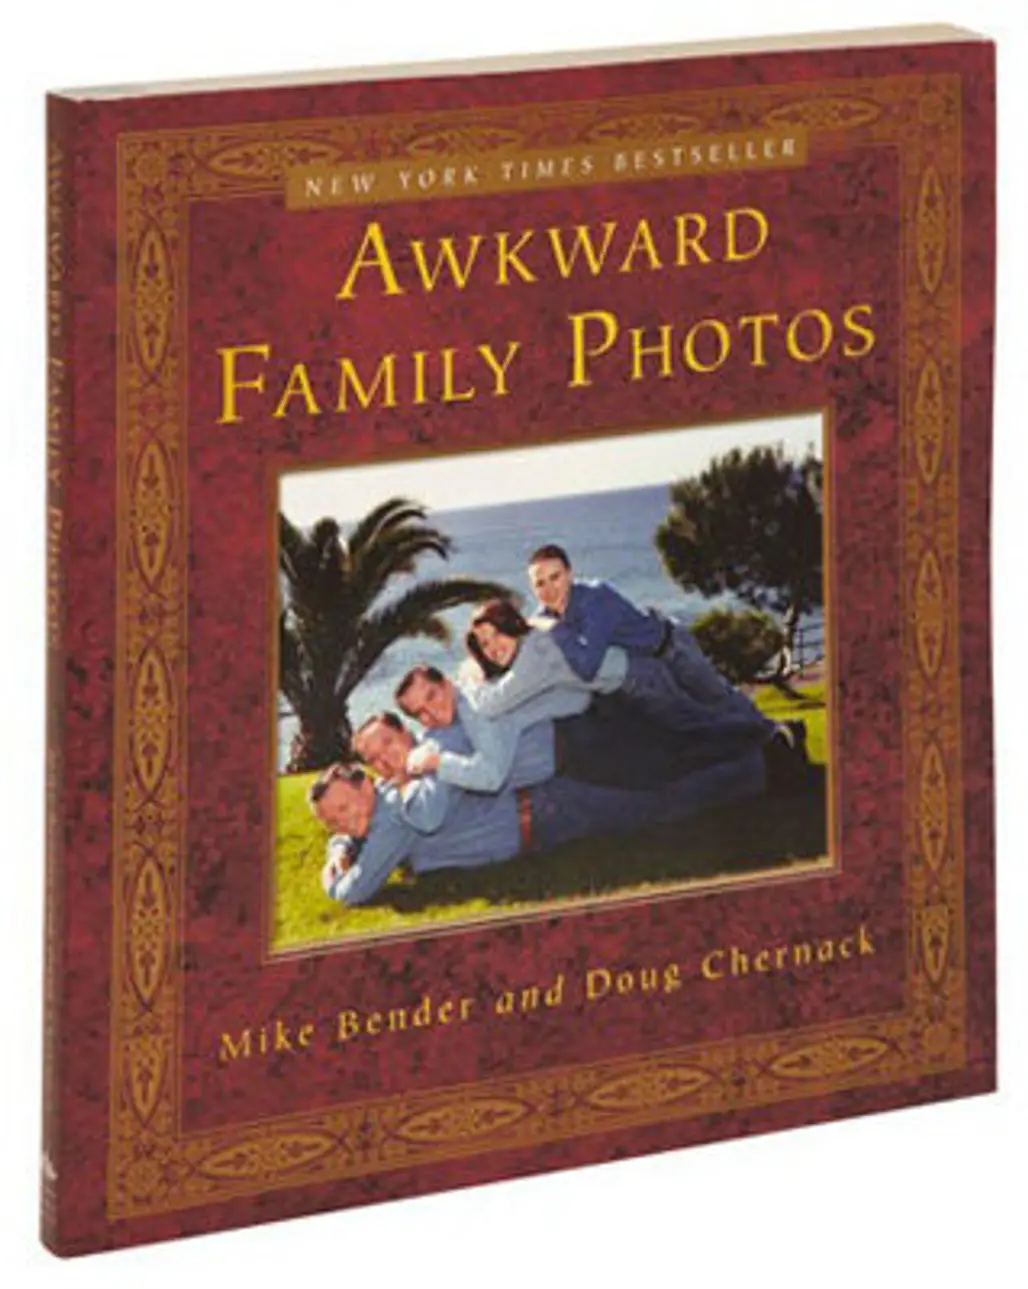 “Awkward Family Photos” by Mike Bender and Doug Chernack